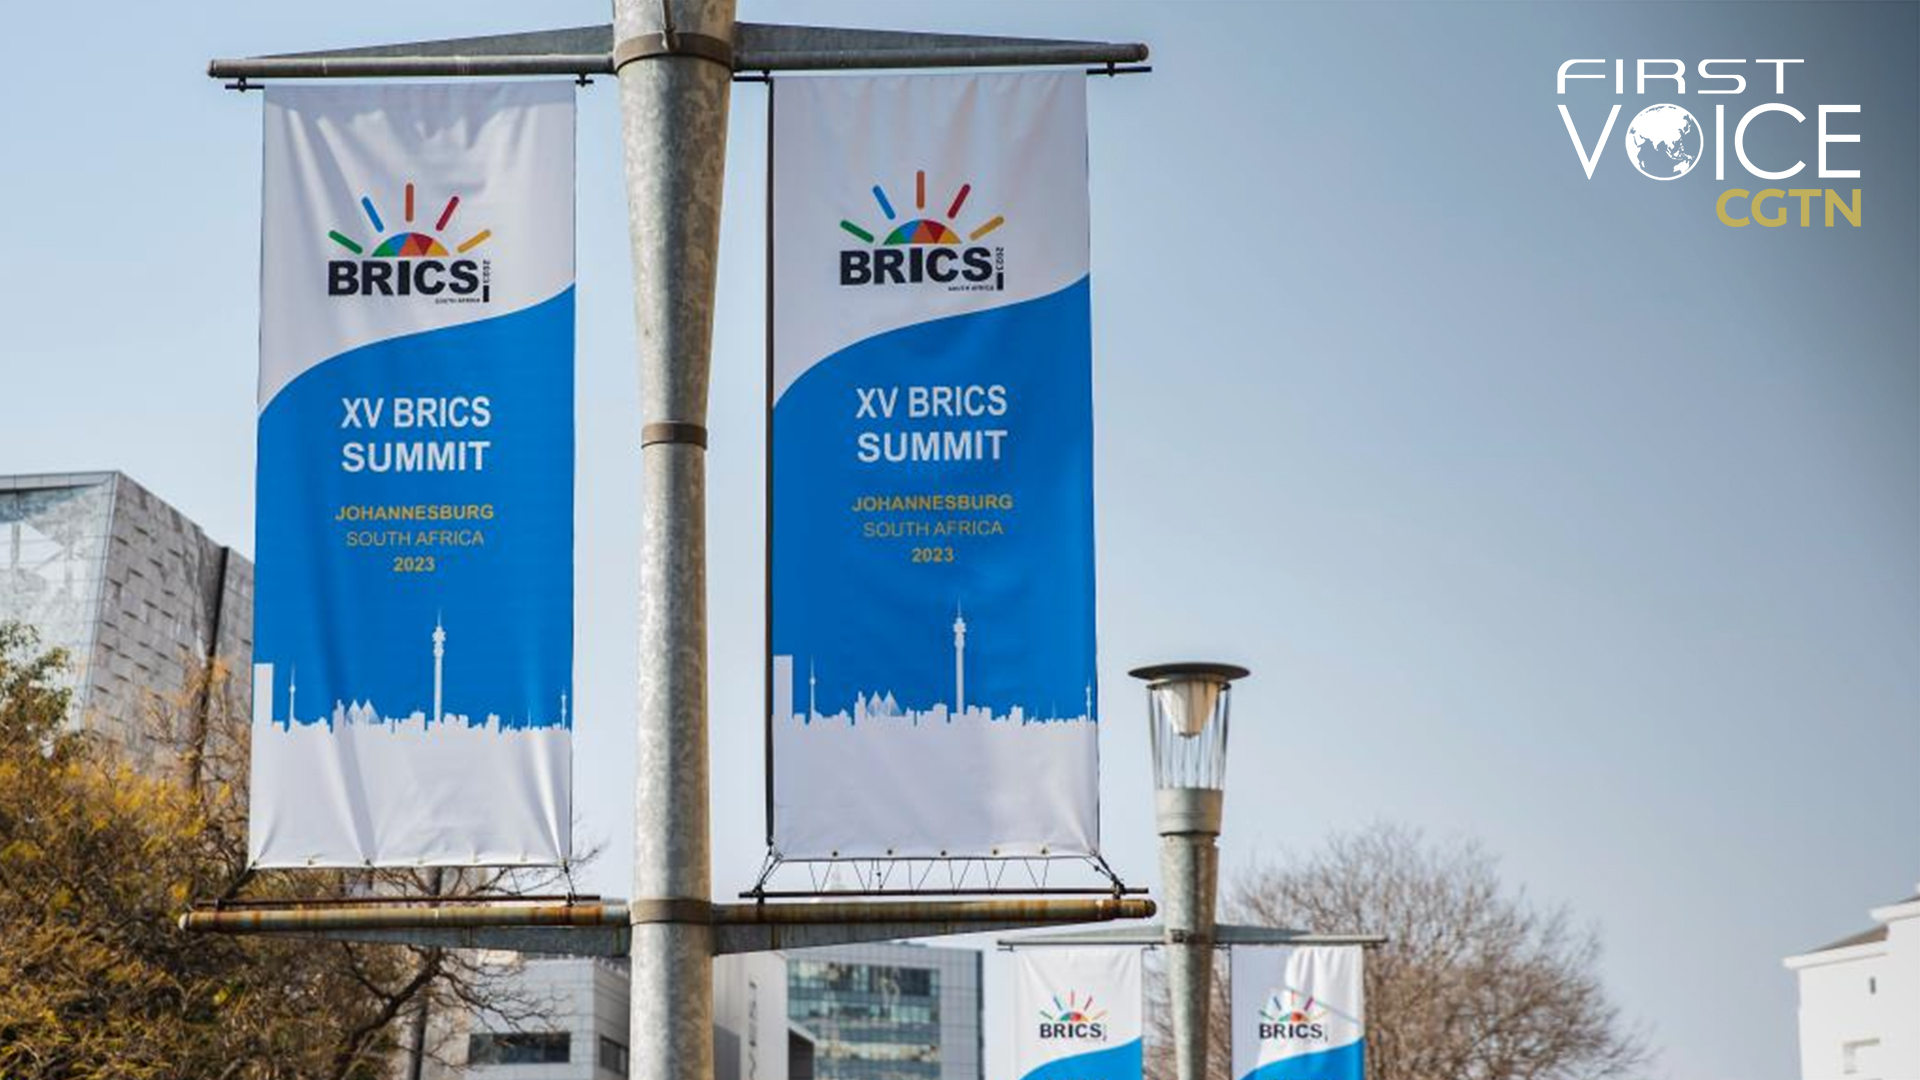 BRICS embraces differences and development